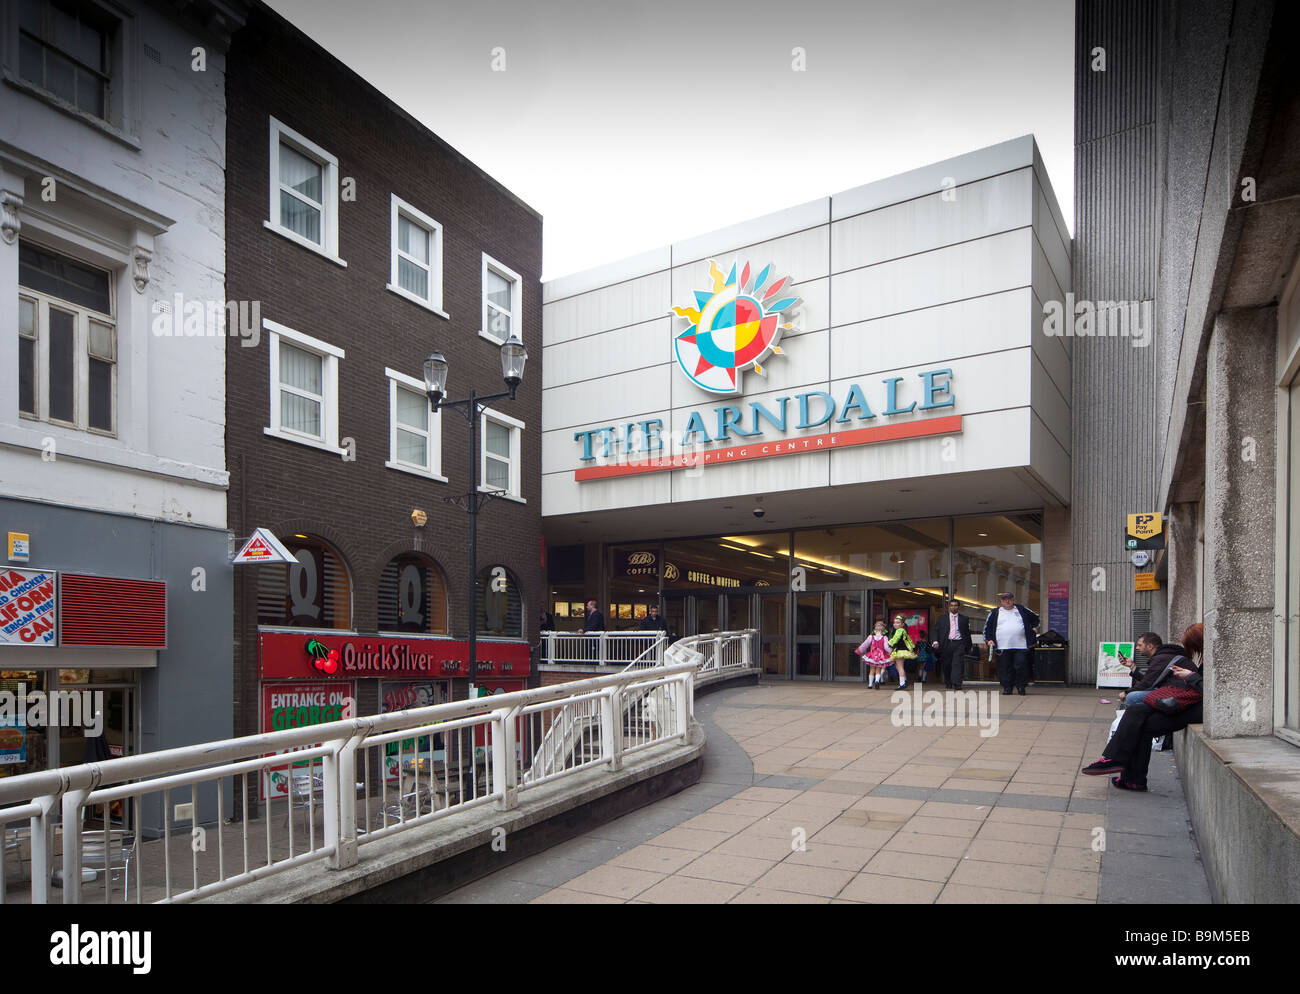 The Arndale shopping centre Croydon Stock Photo